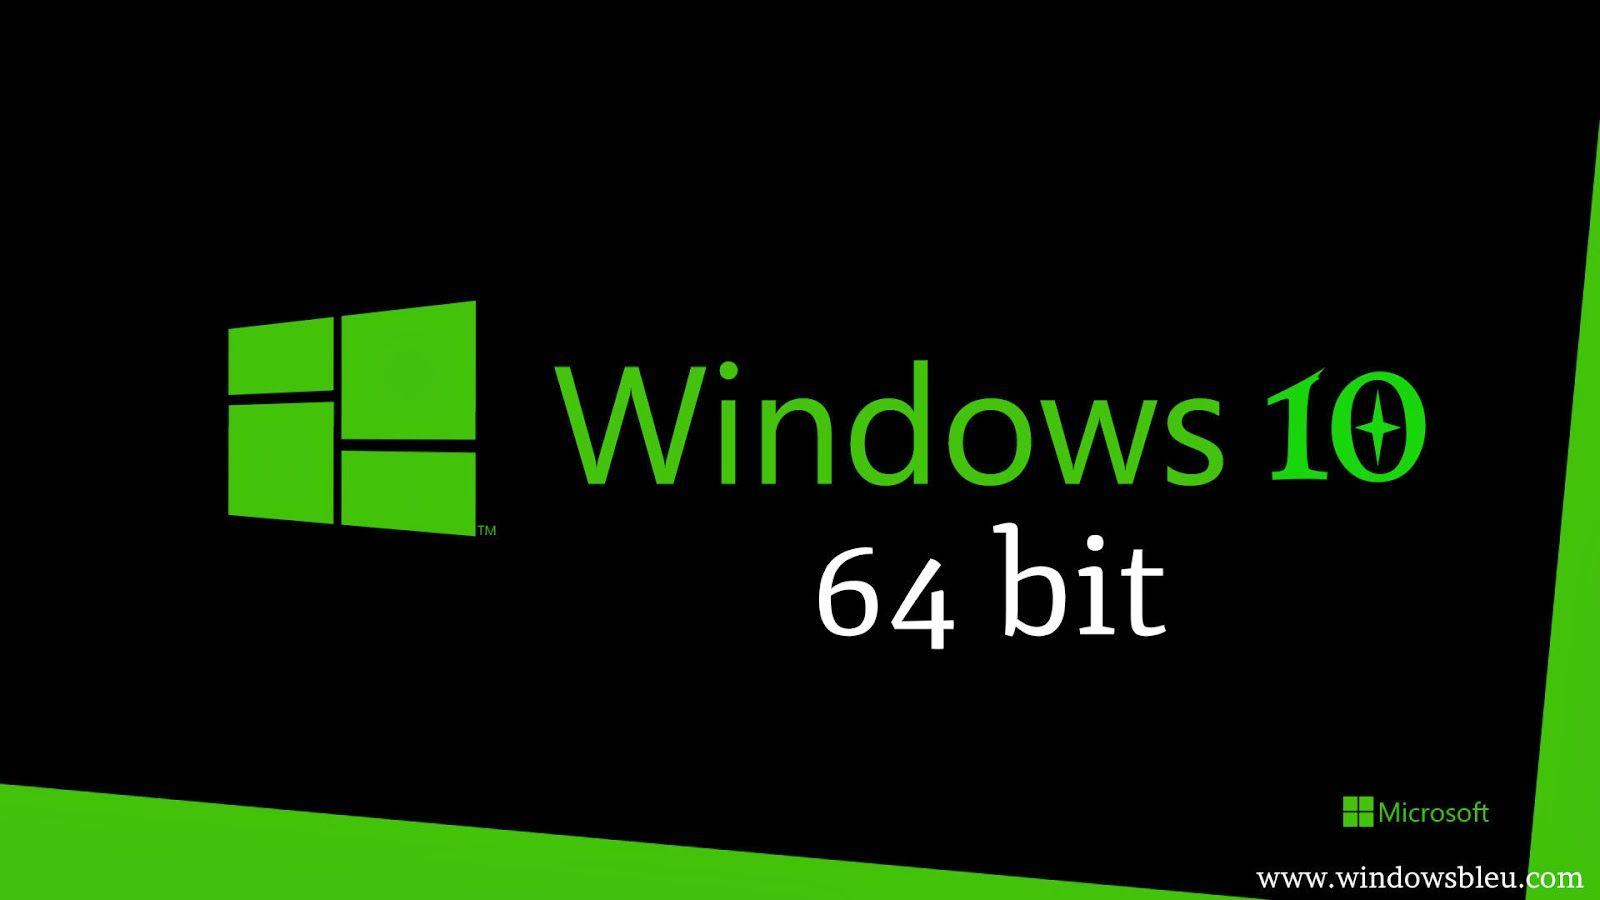 cura 15.04.6 download windows 7 64bit